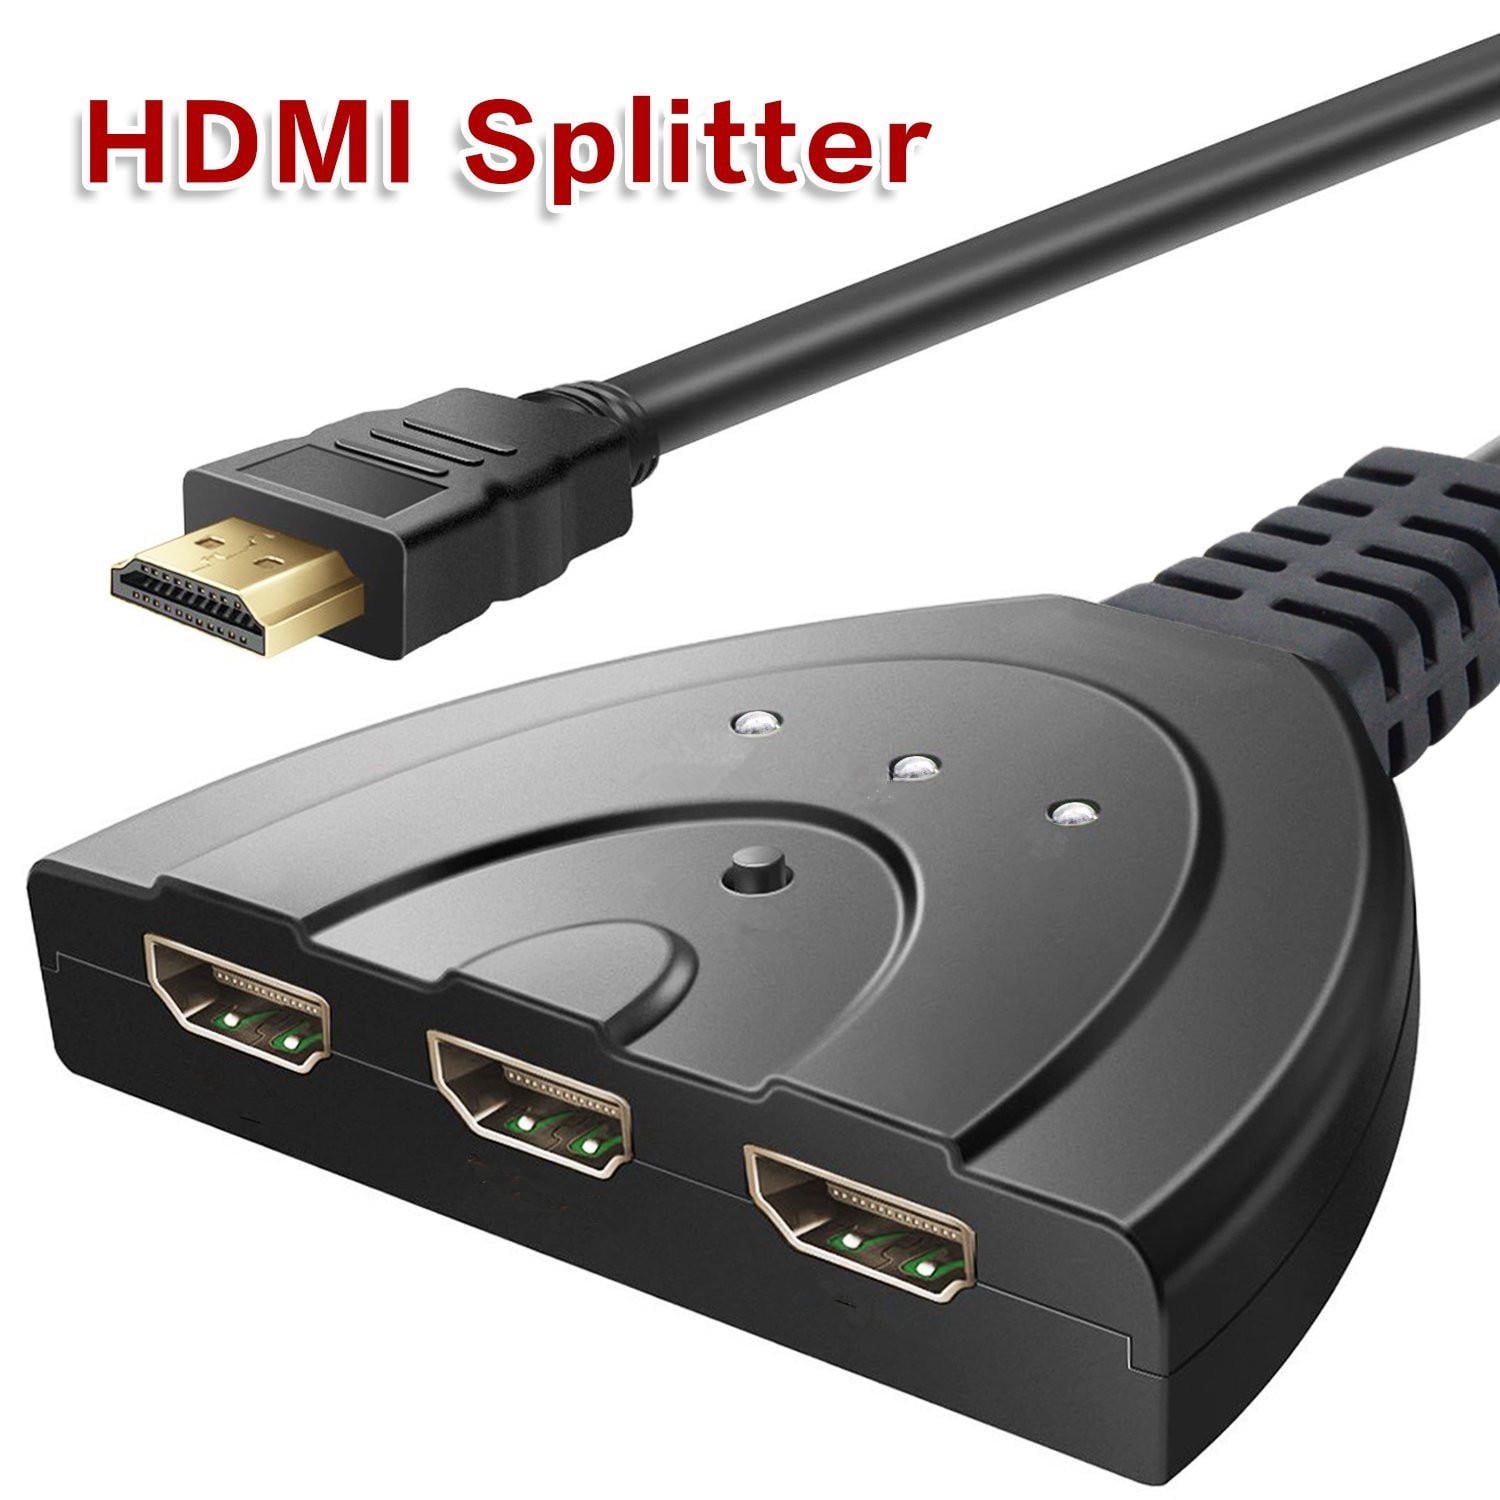 Uregelmæssigheder G spil 3 Port HDMI Switcher Splitter 3D 1080P Full HD 3 Input 1 Output Auto High  Speed HDMI Switch Switcher Splitter Cable Hub Box Adapter for HDTV DVD Xbox  360 With 24K Gold